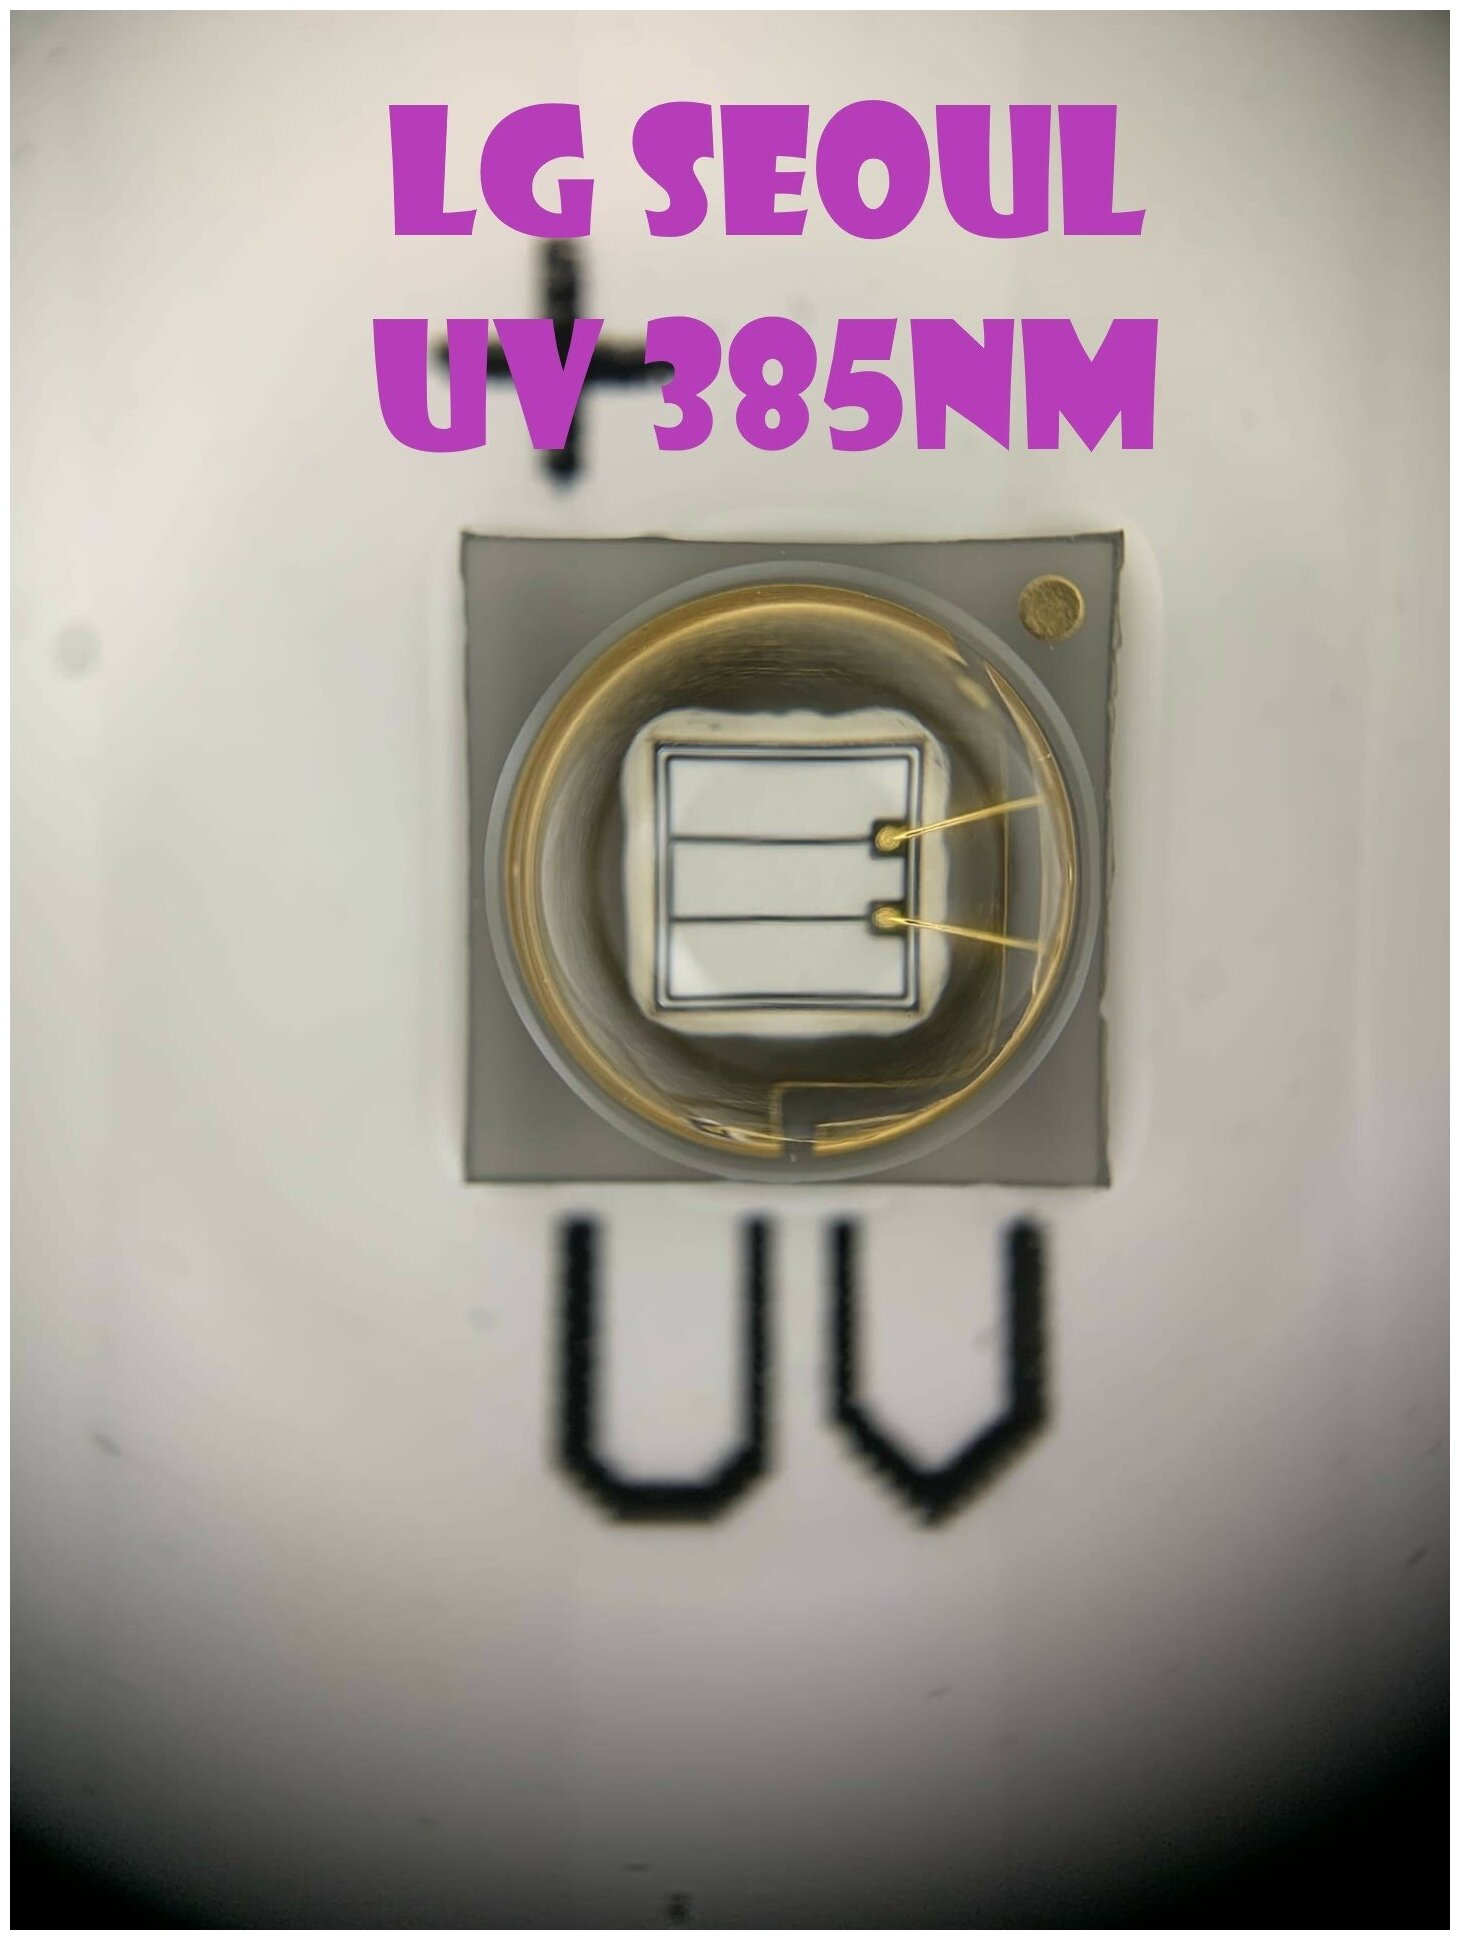 Quantum board 240w Samsung LM301H NEW OSRAM V4 660nm+IR LG SEOUL UV 385nm ( Фитолампа для растений полного спектра, Квантум борд 240 ватт ) - фотография № 10